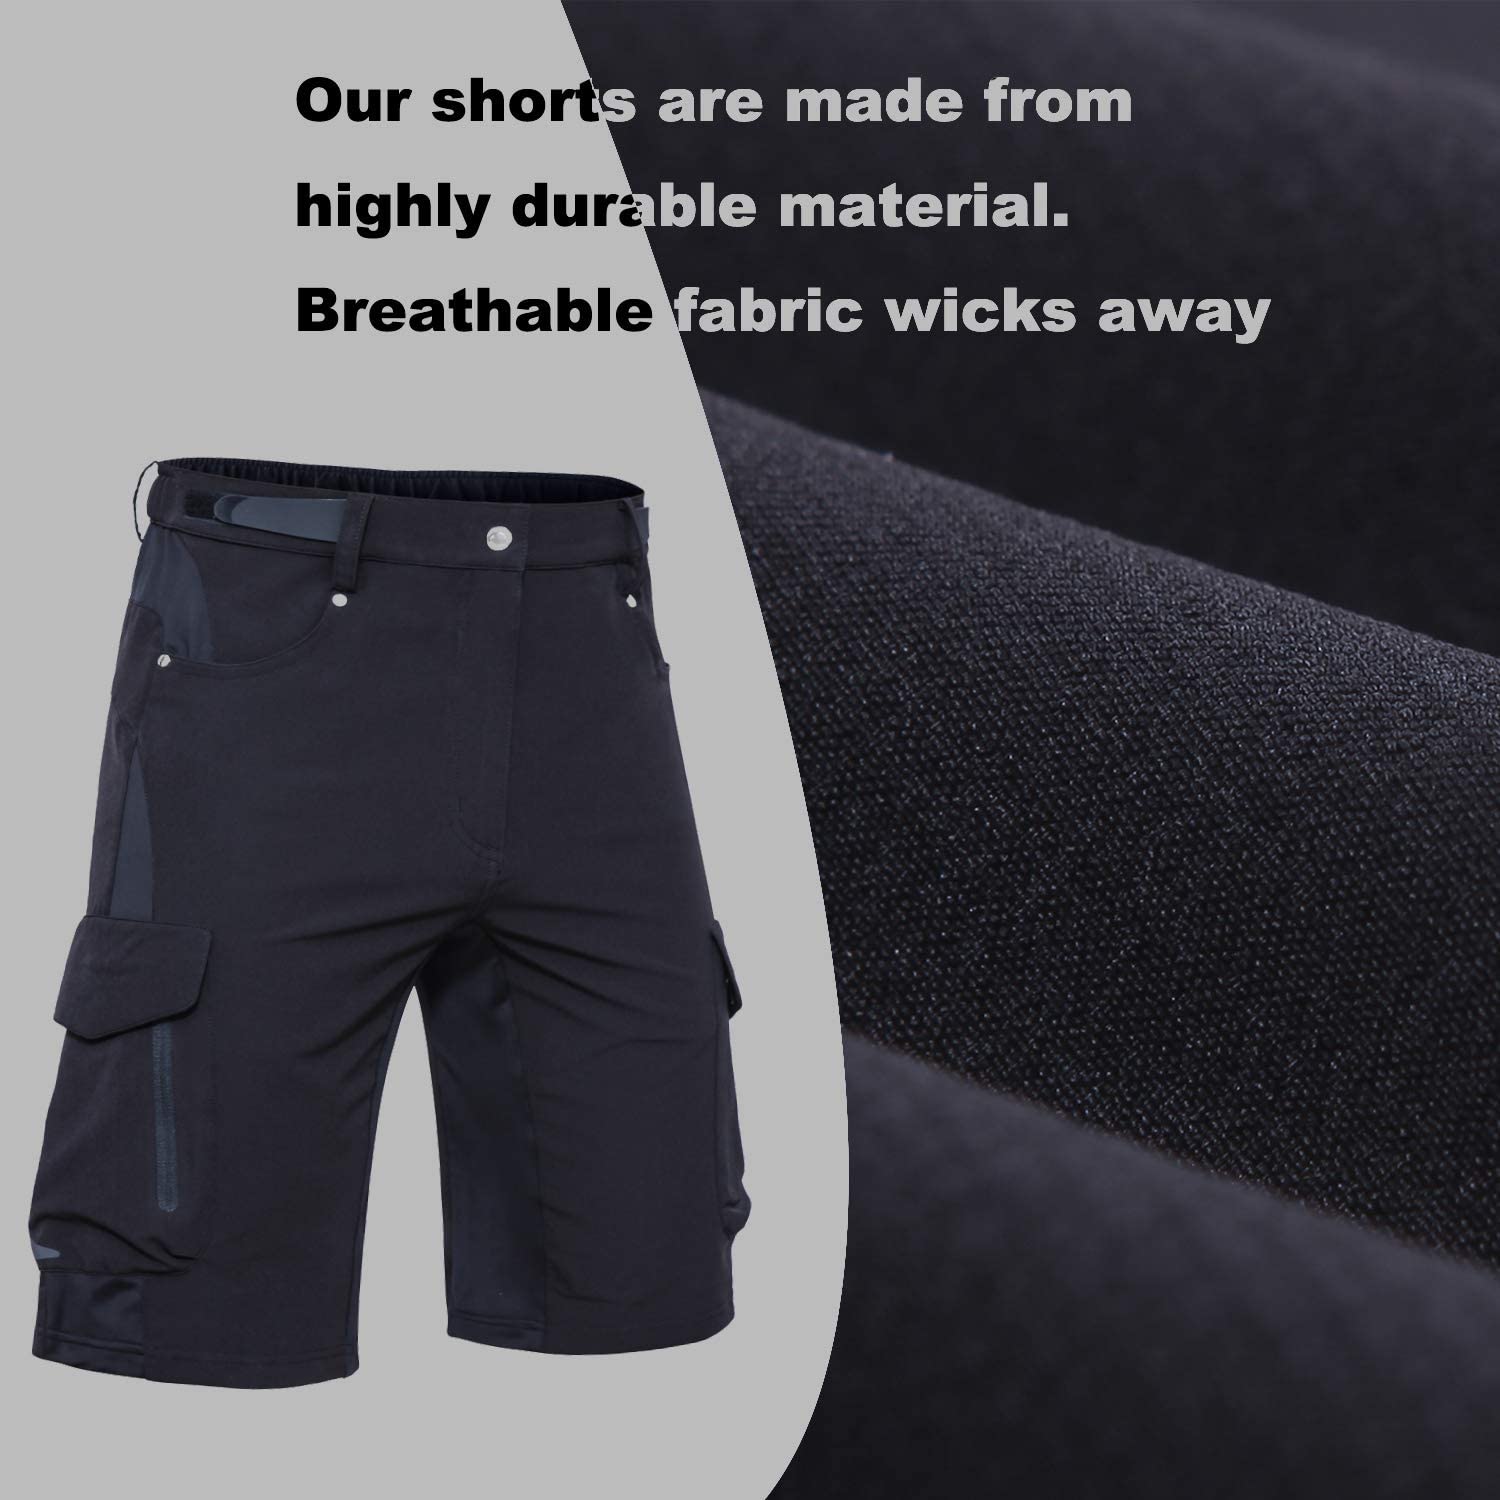 Hiauspor-Men's-Hiking-Pants-Outdoor，Breathable Stretch Cargo